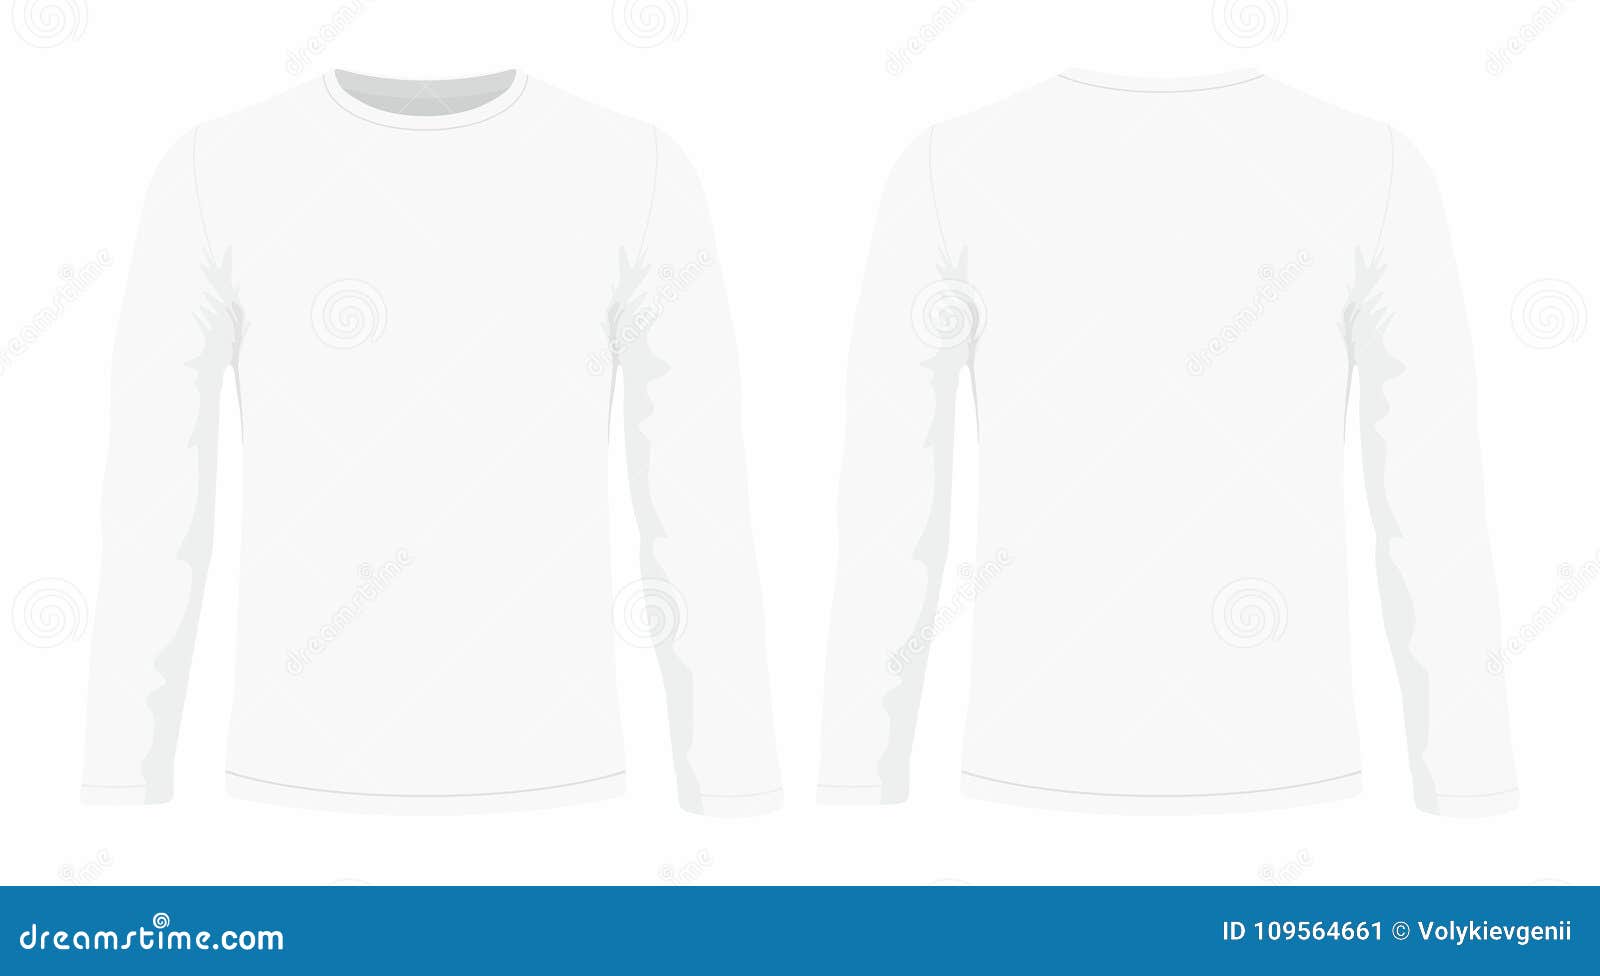 plain white long sleeve shirt